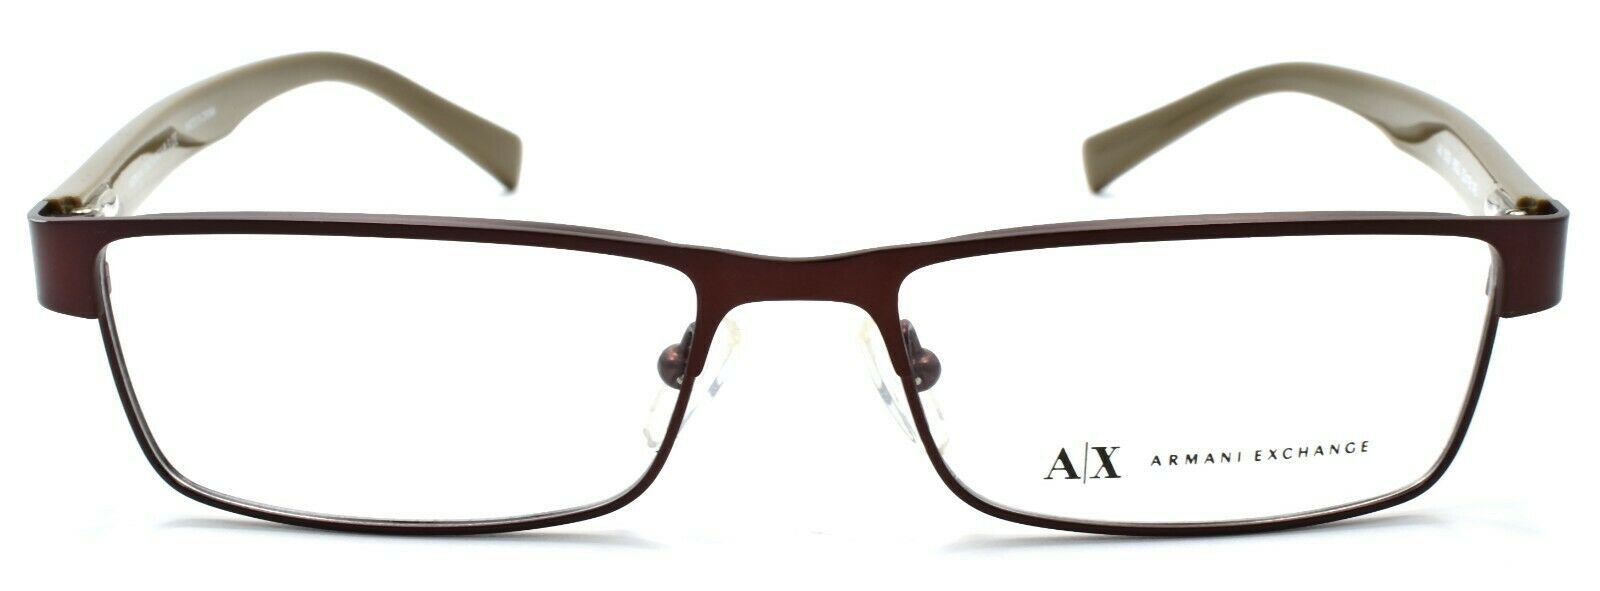 2-Armani Exchange AX1009 6052 Men's Glasses Frames 53-16-145 Satin Coffee / Capers-8053672241648-IKSpecs